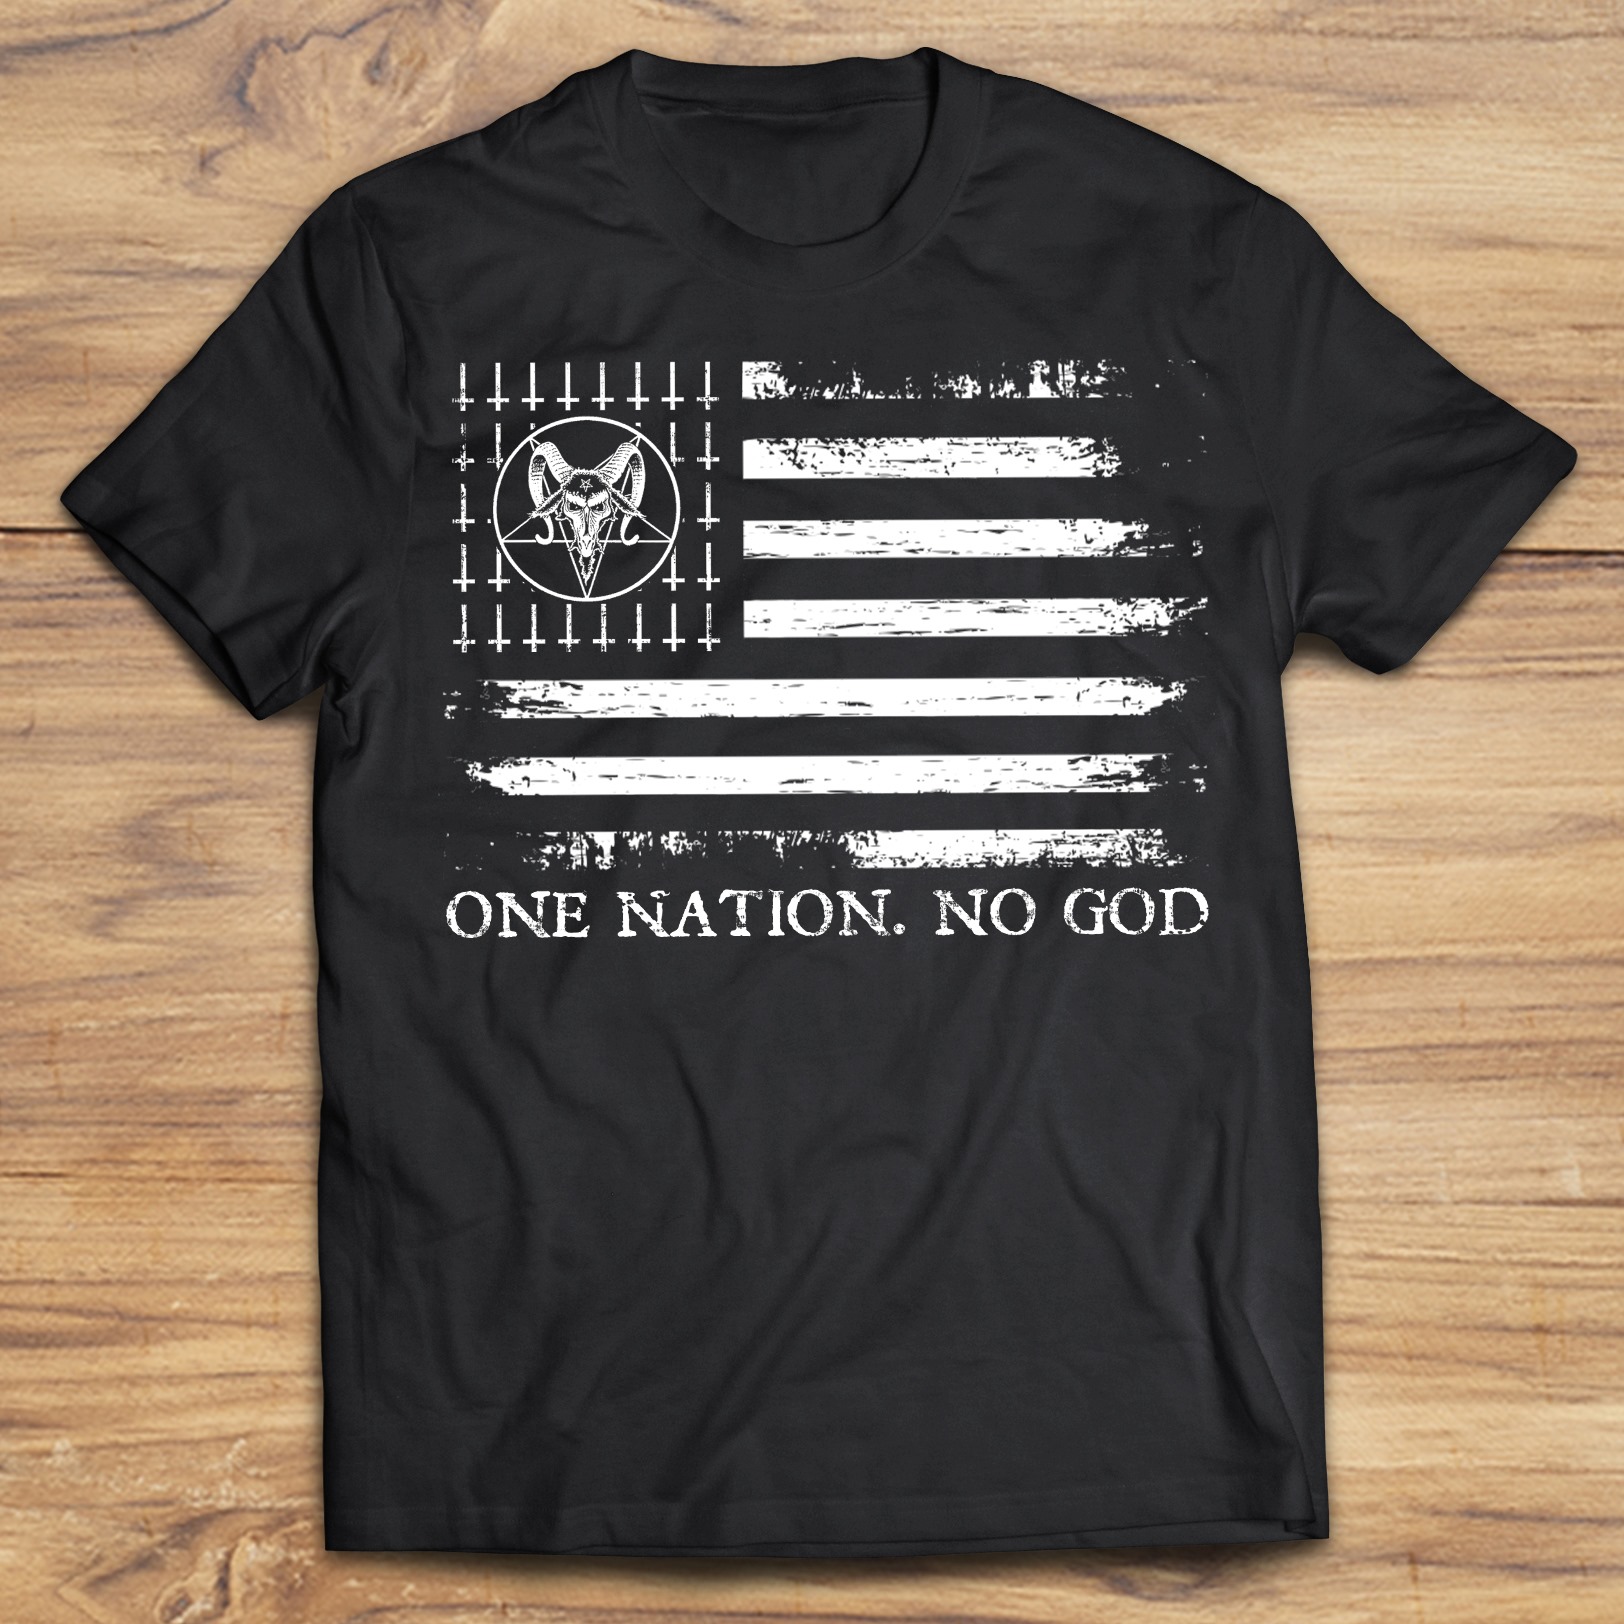 One nation, no god - Satan and America flag